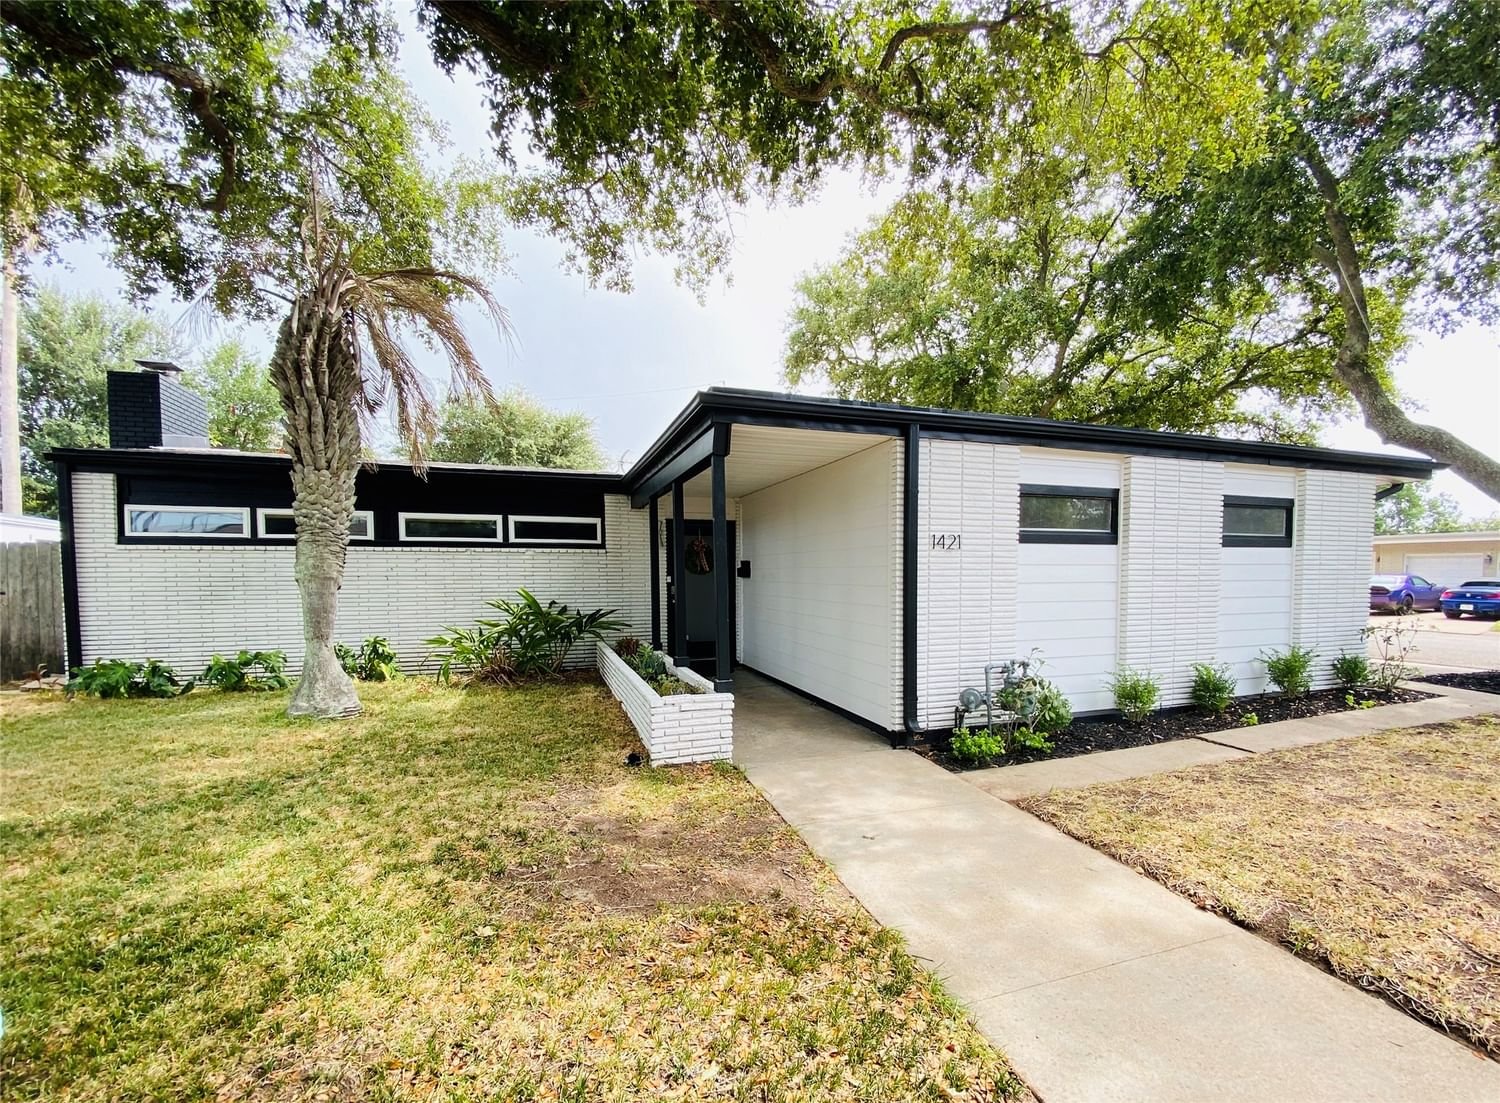 Real estate property located at 1421 Harbor View, Galveston, Harborview 1, Galveston, TX, US